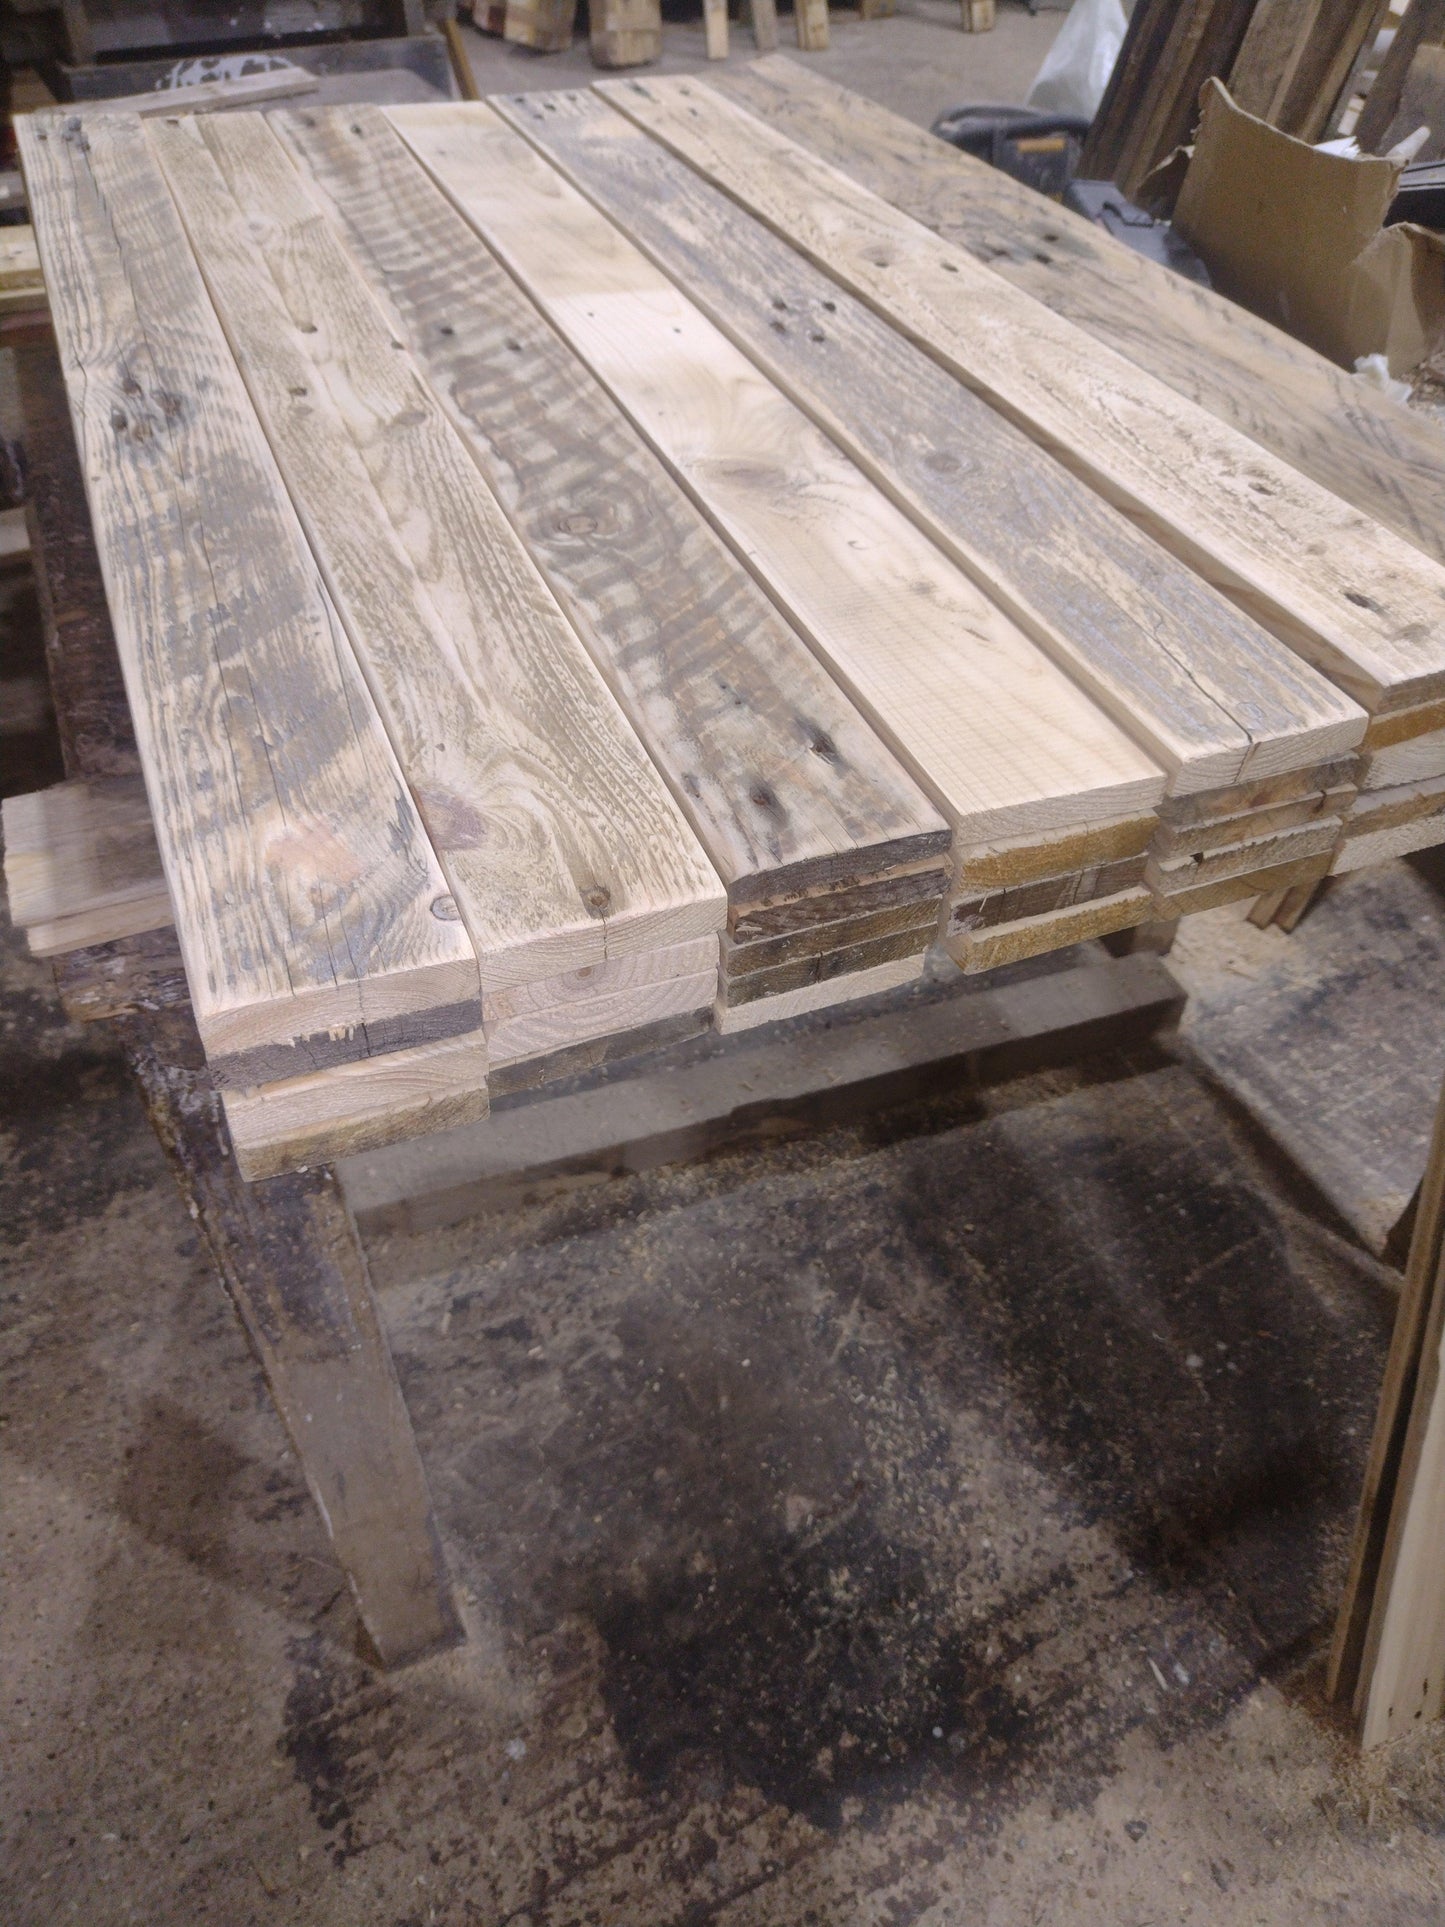 Reclaimed Wood Rustic Sanded For Decorative Cladding 10m2 - Anpio woods ltd